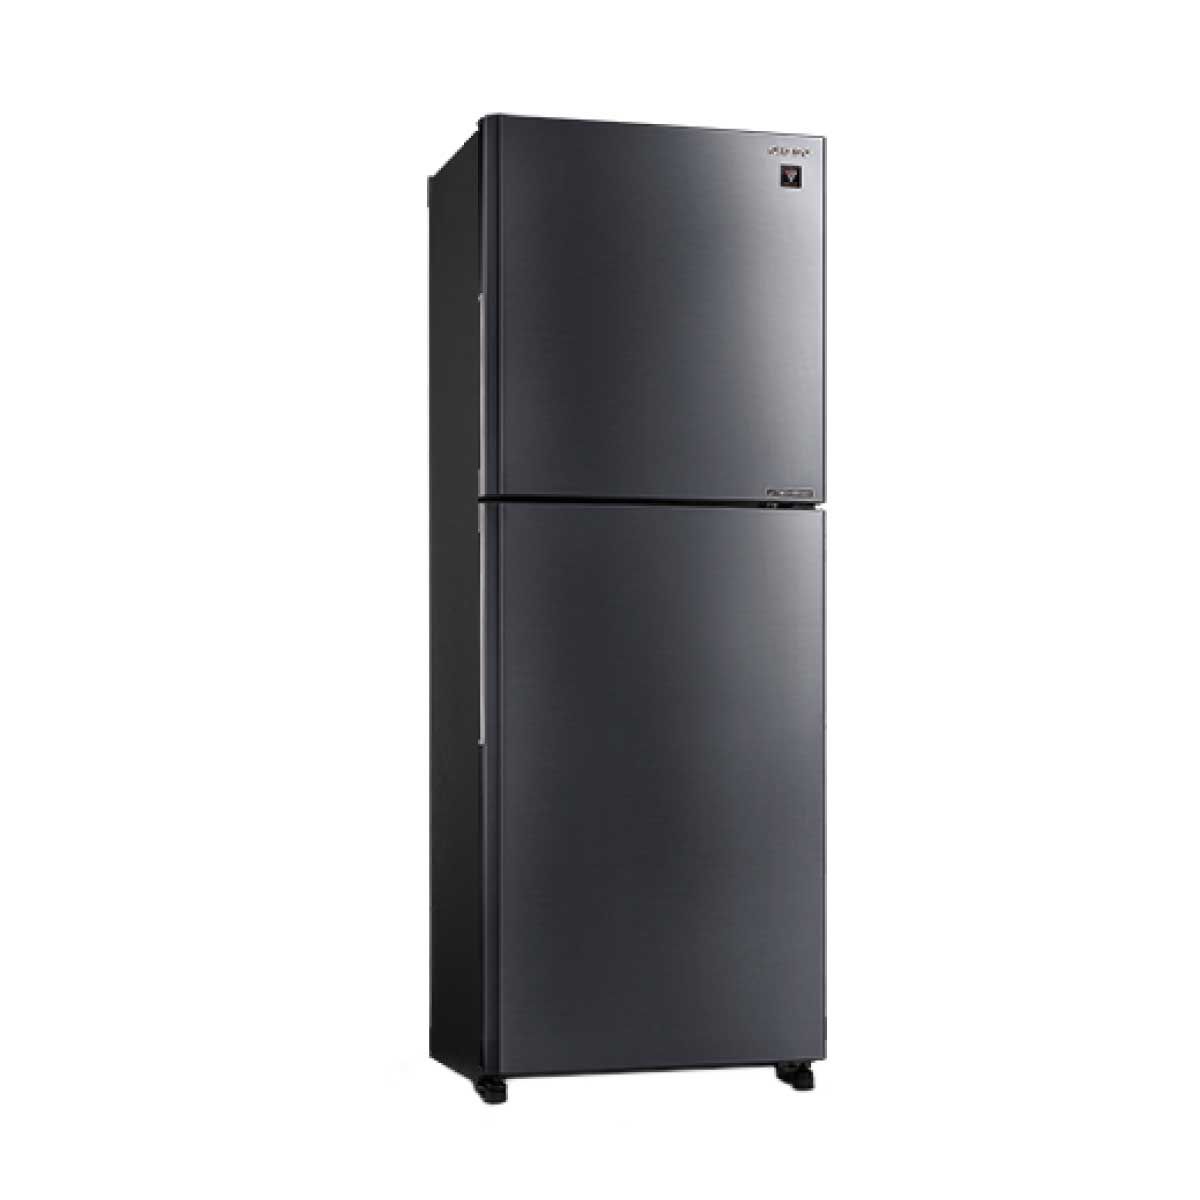 SHARP ตู้เย็น 2 ประตู PEACH SERIES 10.6 คิว Inverter รุ่น SJ-XP300TP-DK